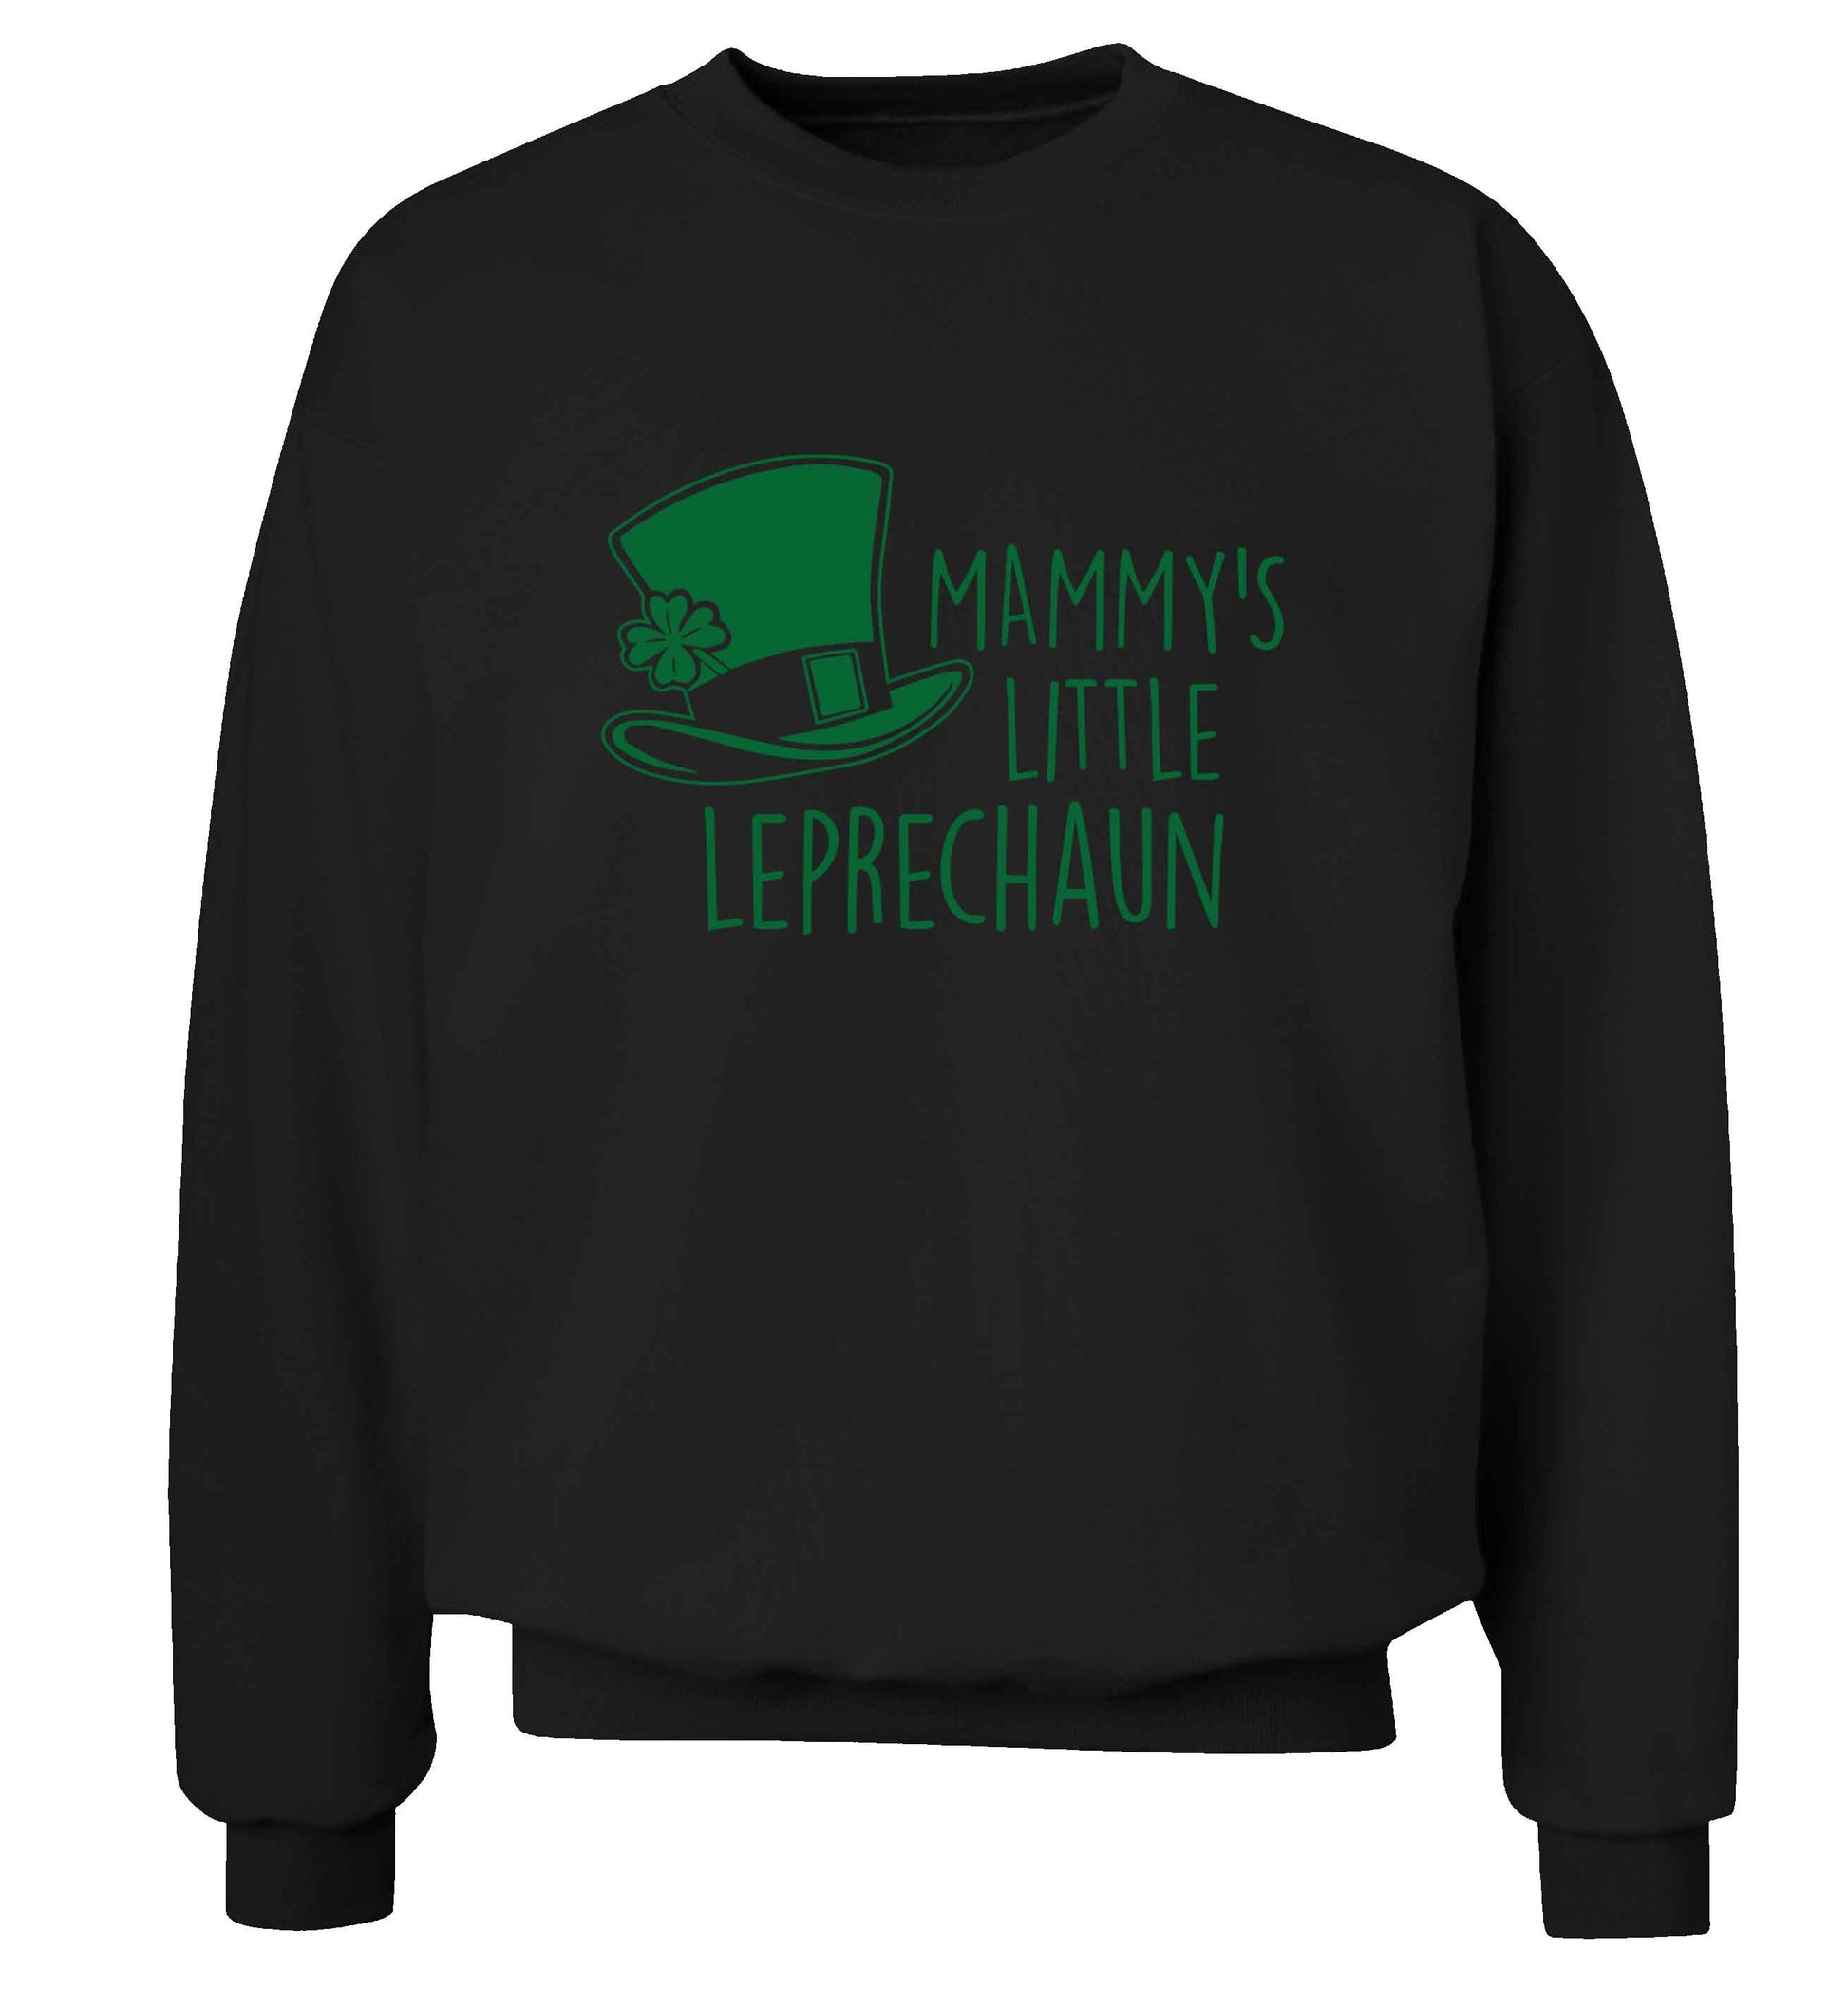 Mammy's little leprechaun adult's unisex black sweater 2XL